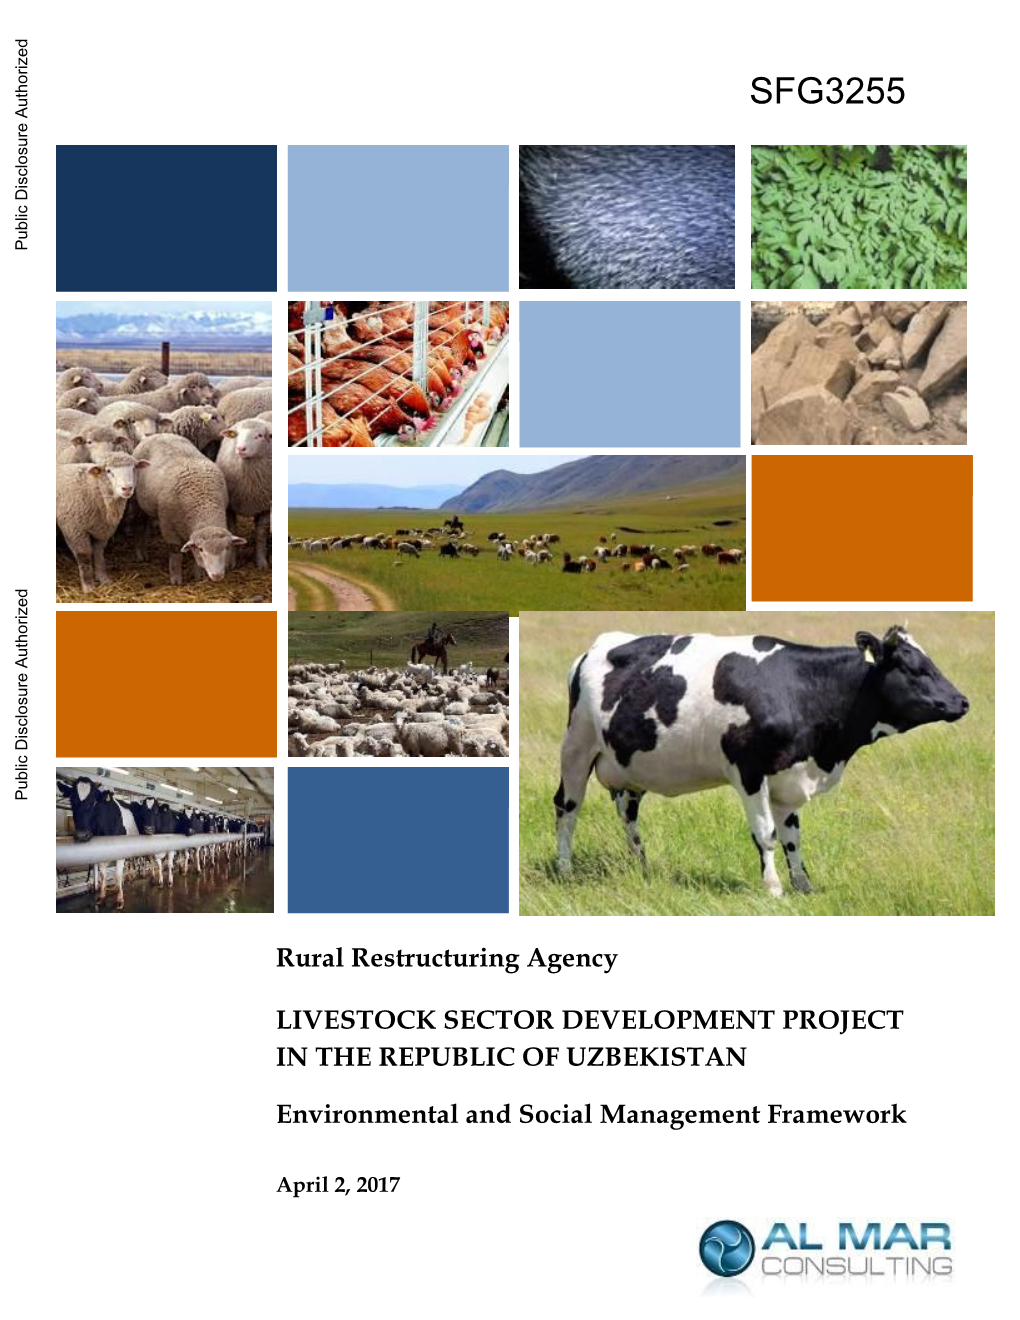 Livestock Sector Development Project : Environmental Assessment